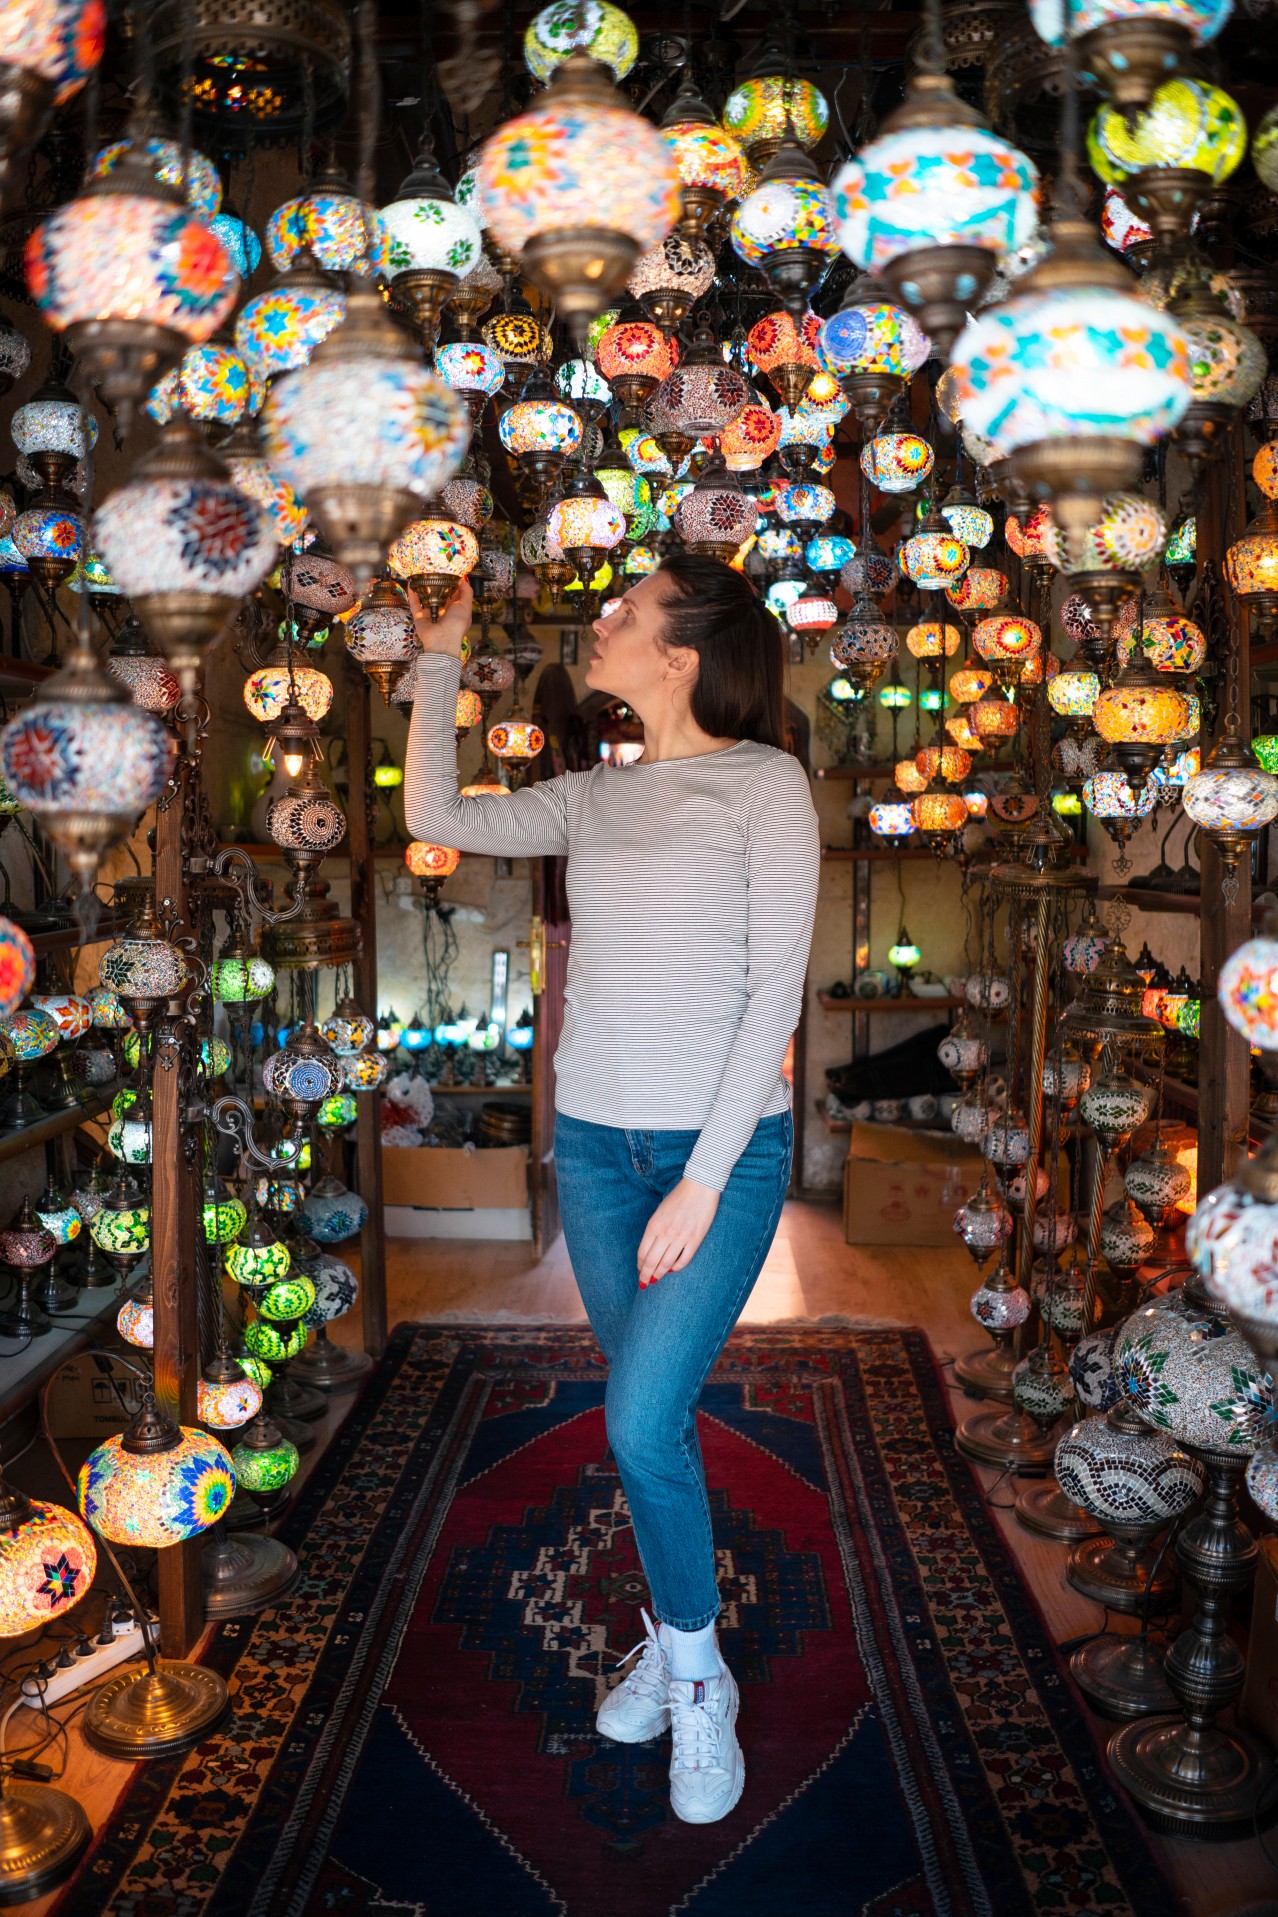 Woman looks at the Turkish lanterns